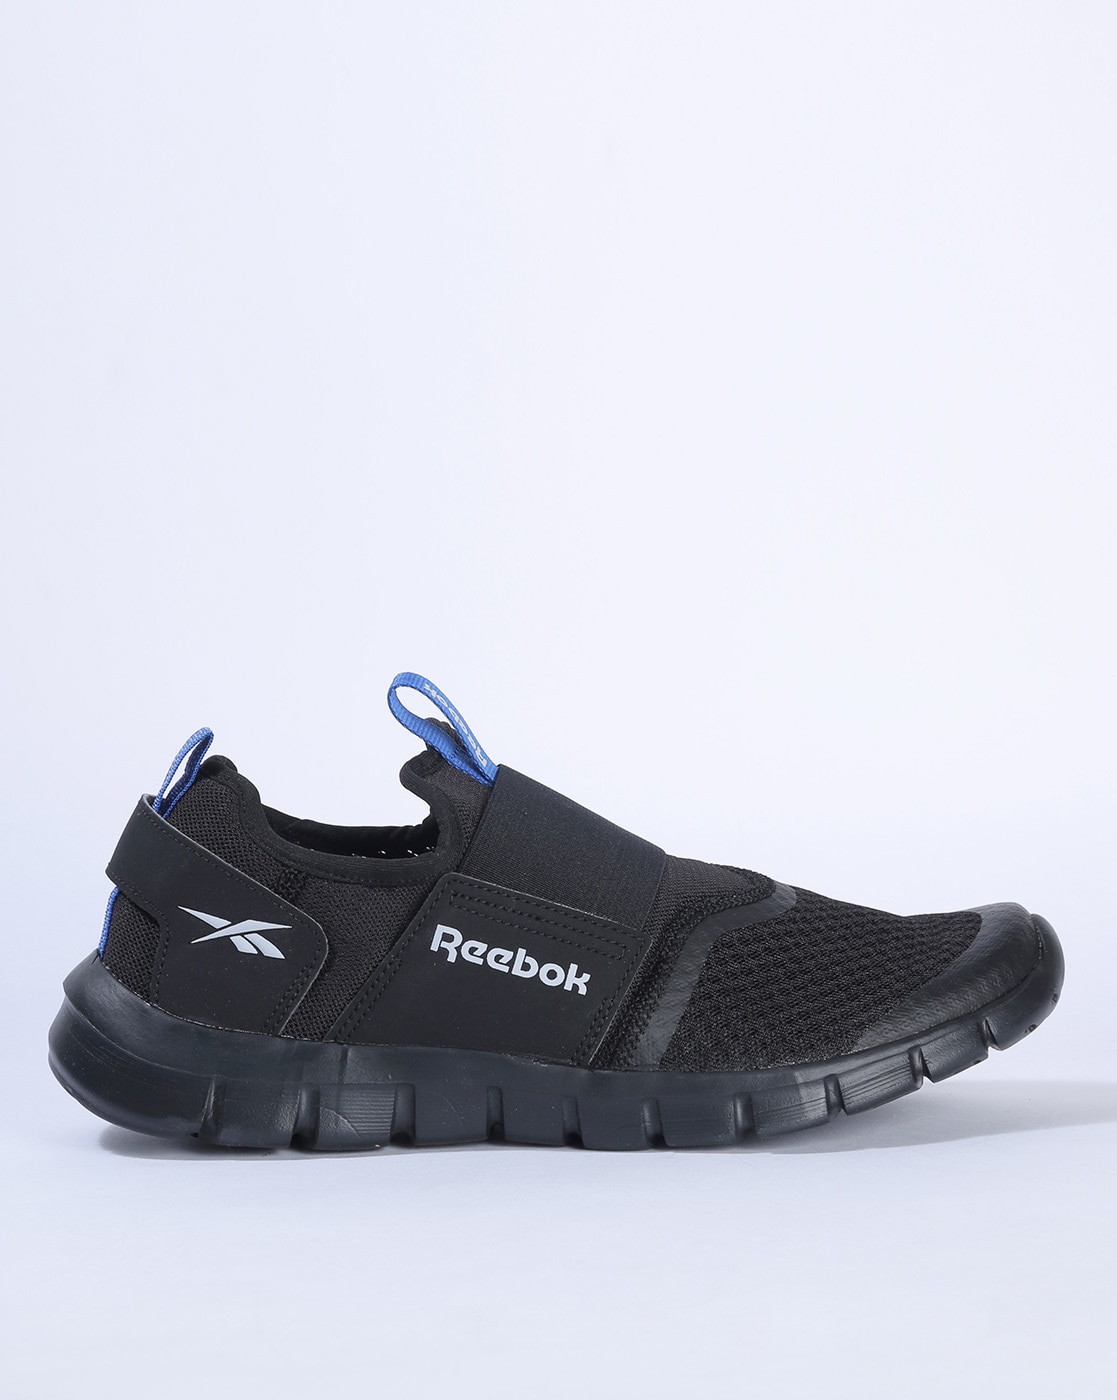 slip on reebok shoes